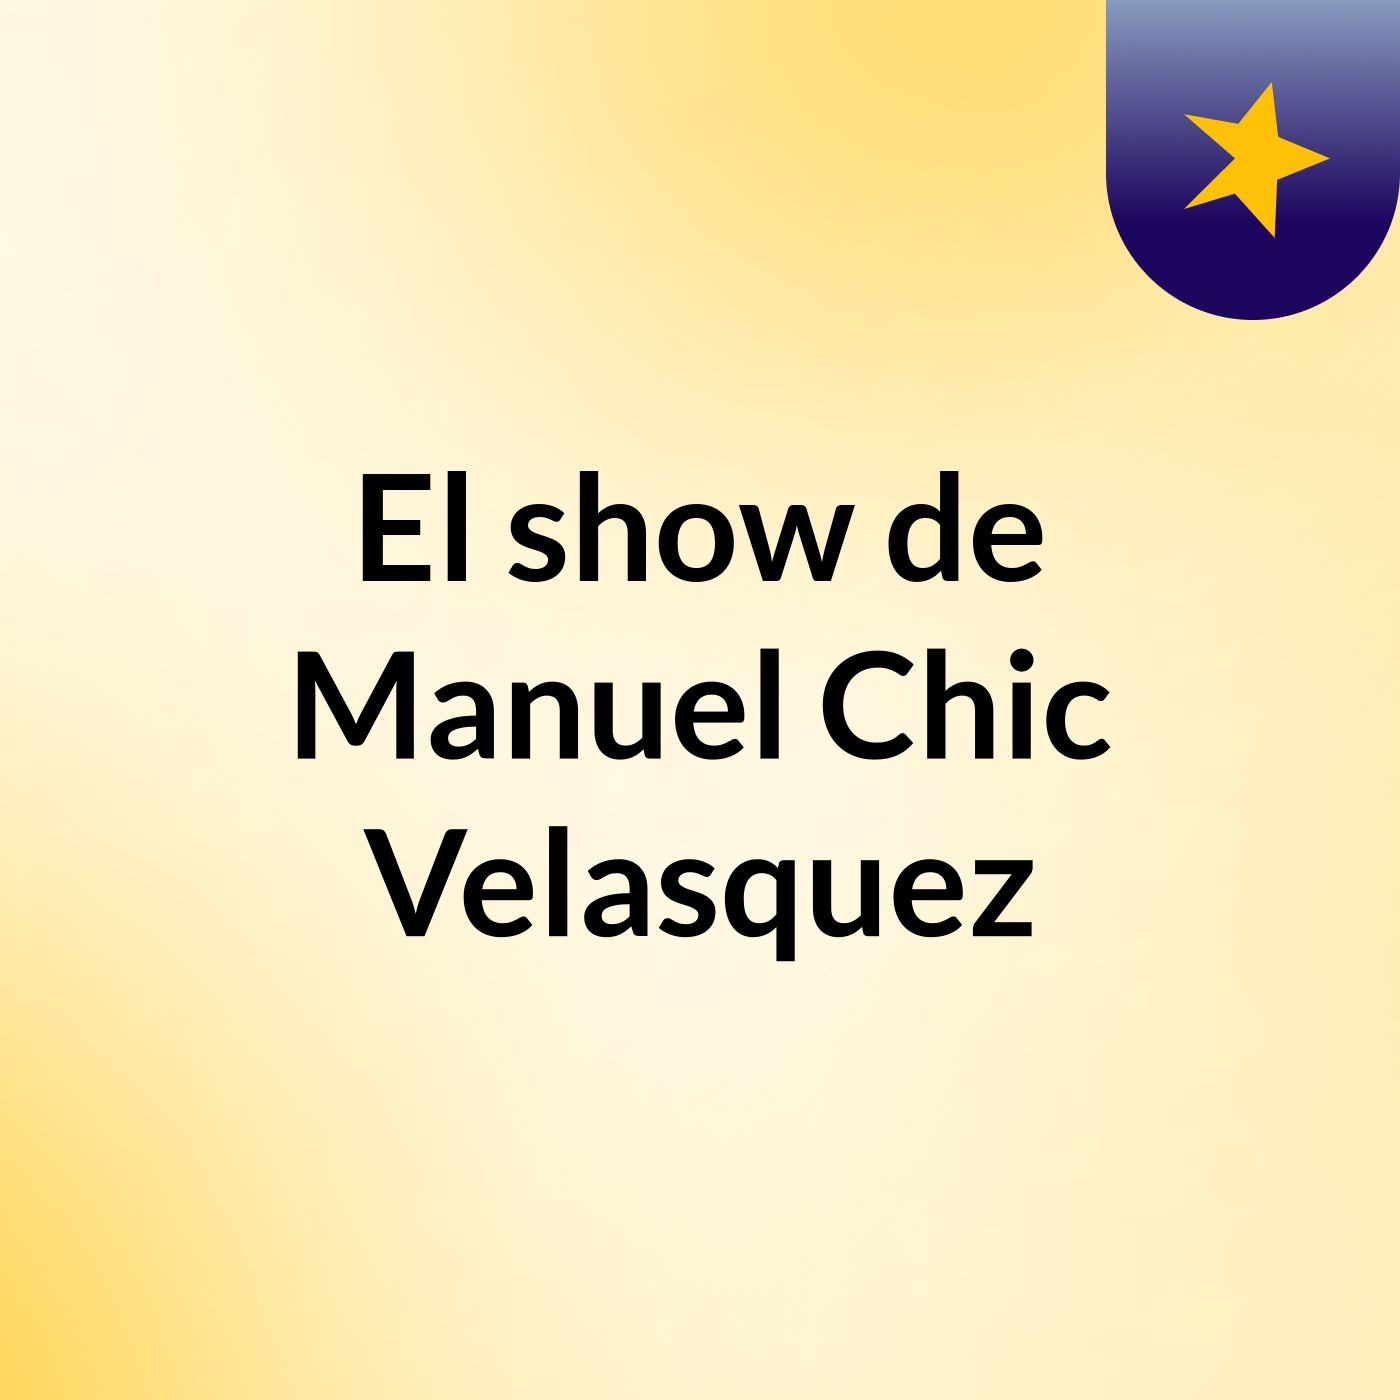 El show de Manuel Chic Velasquez